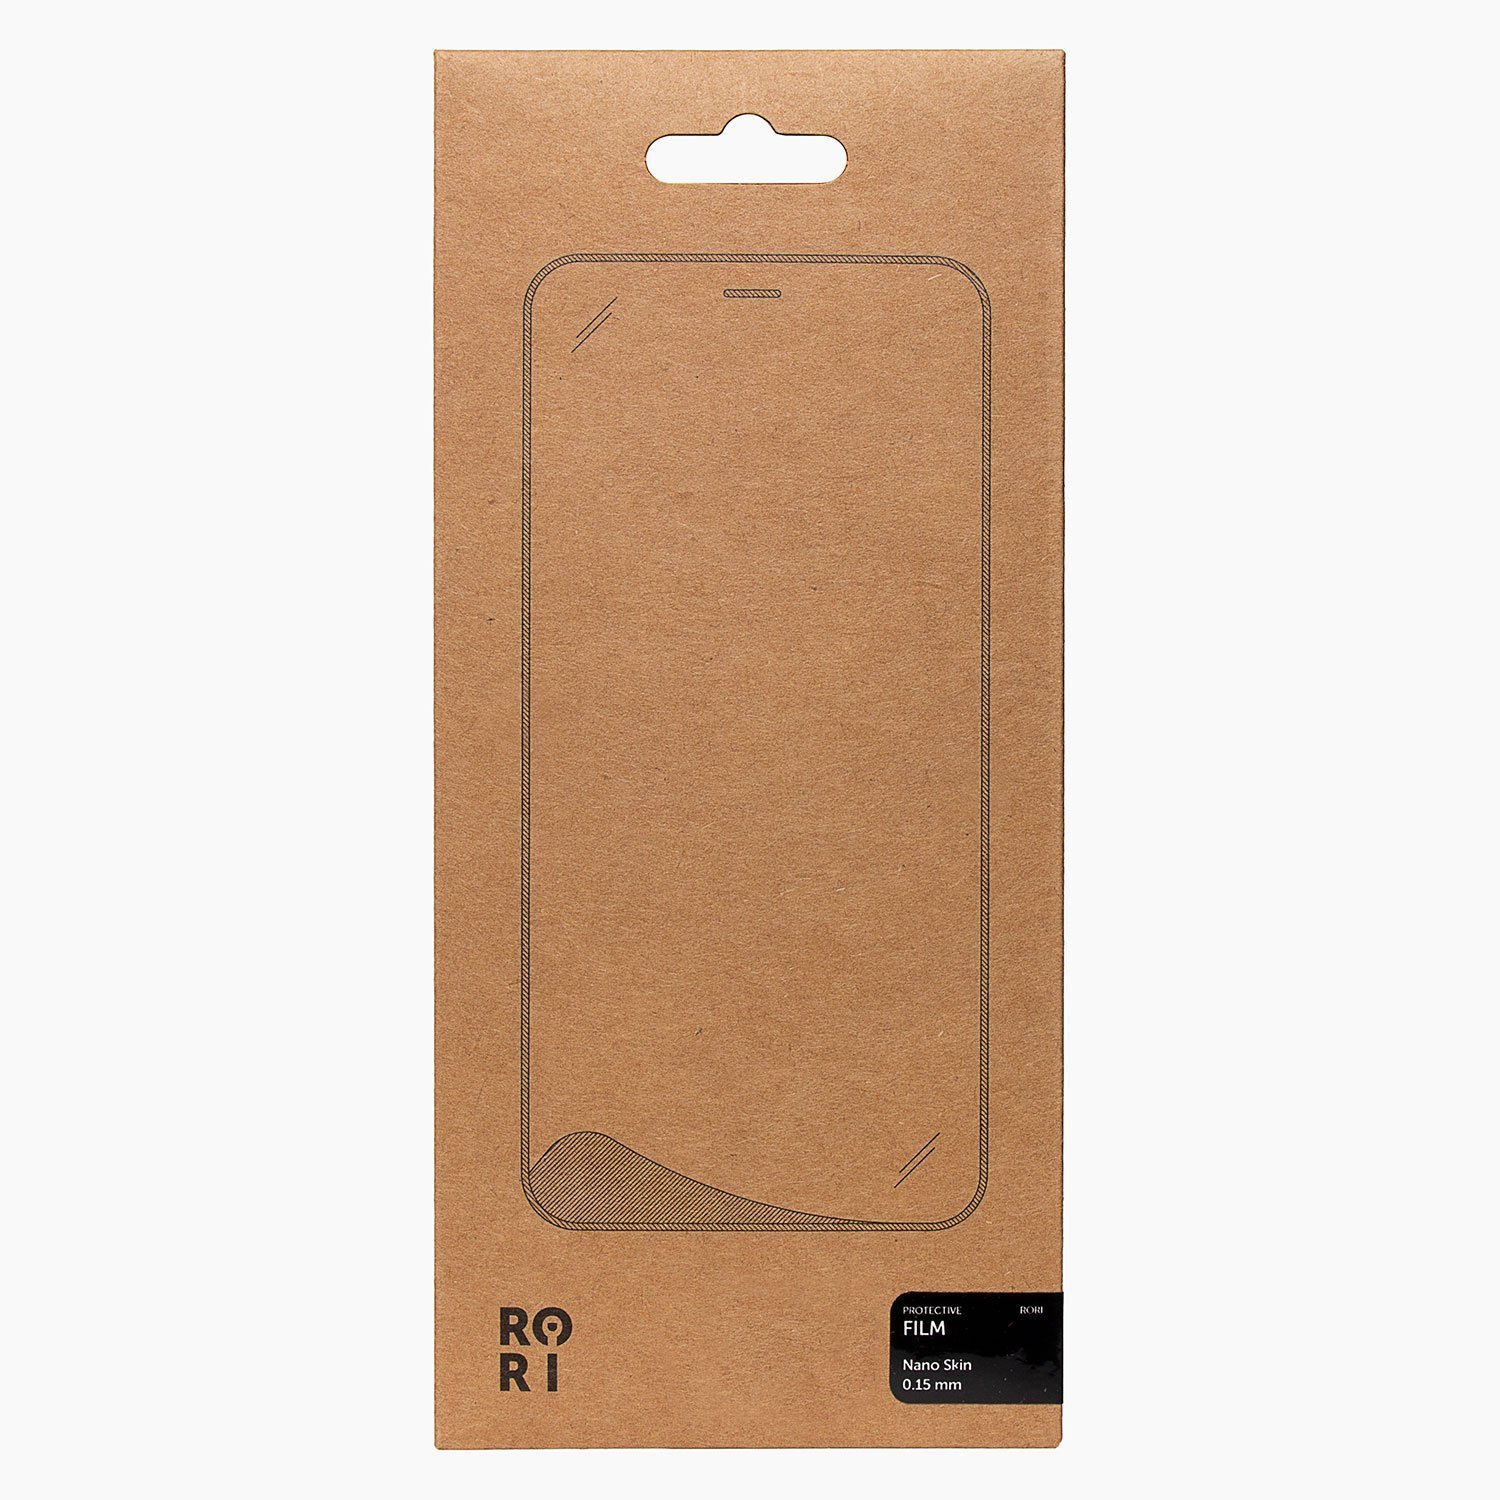 Защитная пленка Rori Polymer для экрана смартфона Xiaomi Redmi 9C, FullScreen, черная рамка (119544)